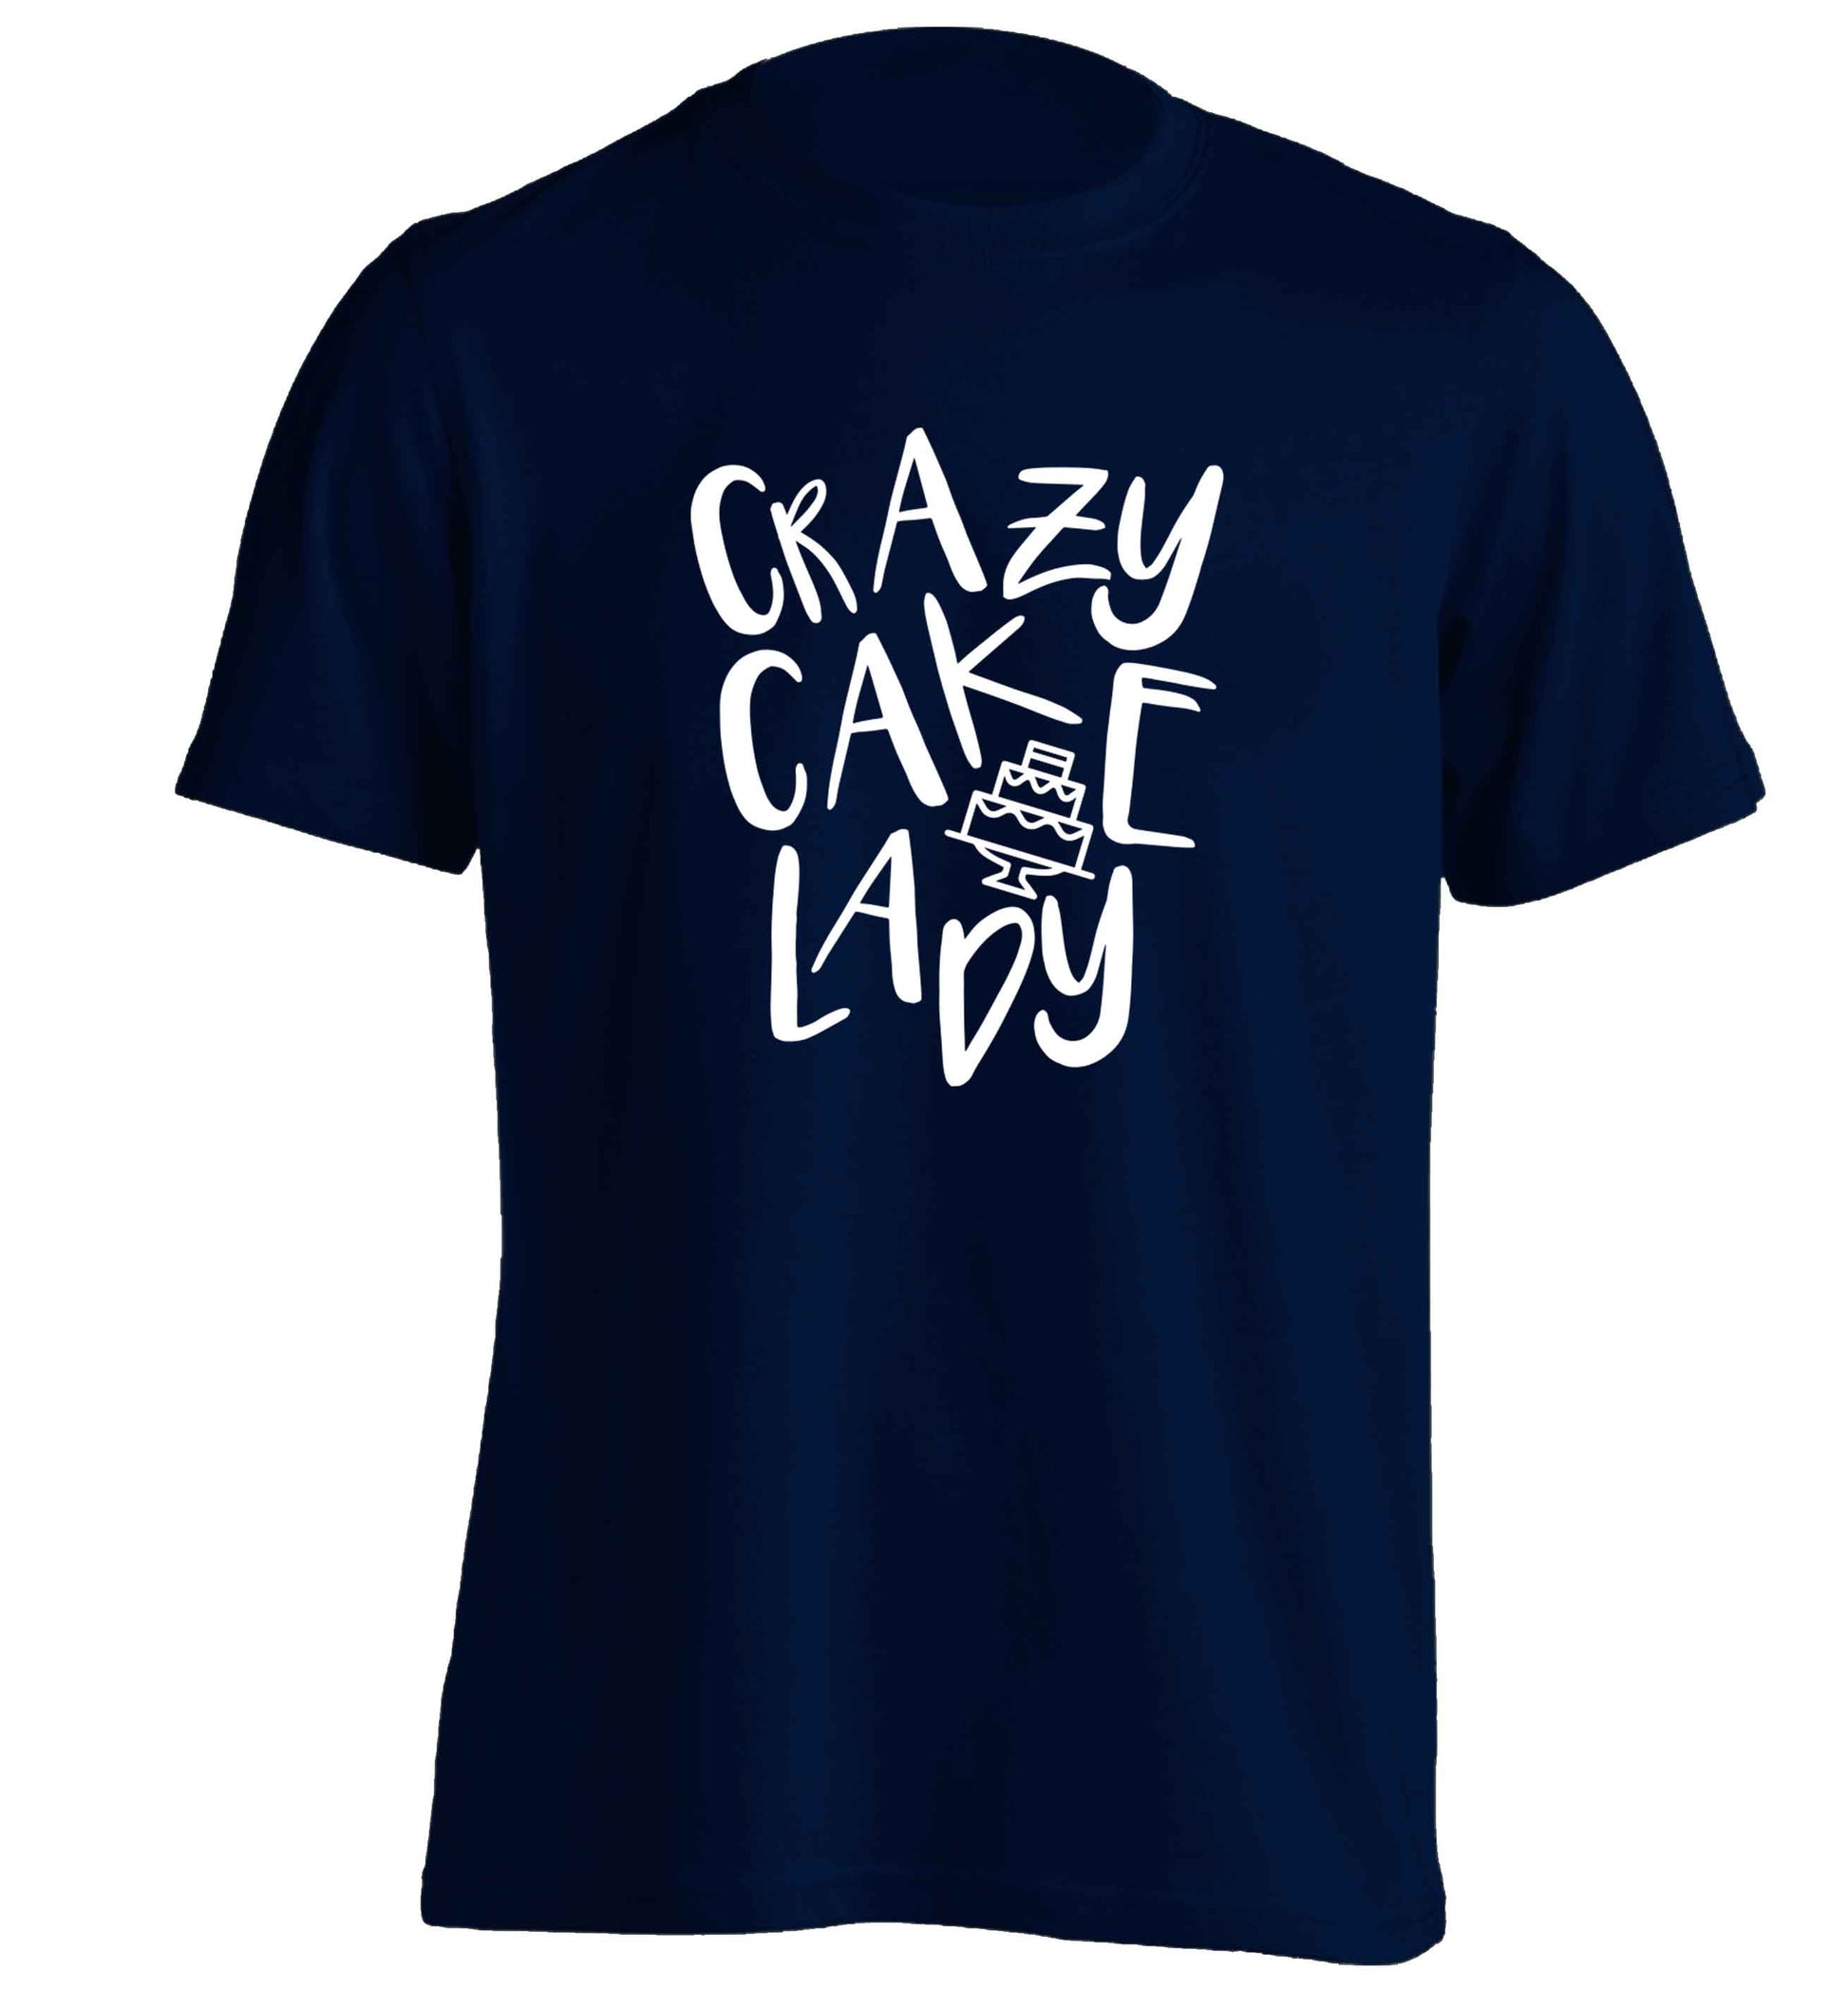 Crazy cake lady adults unisex navy Tshirt 2XL